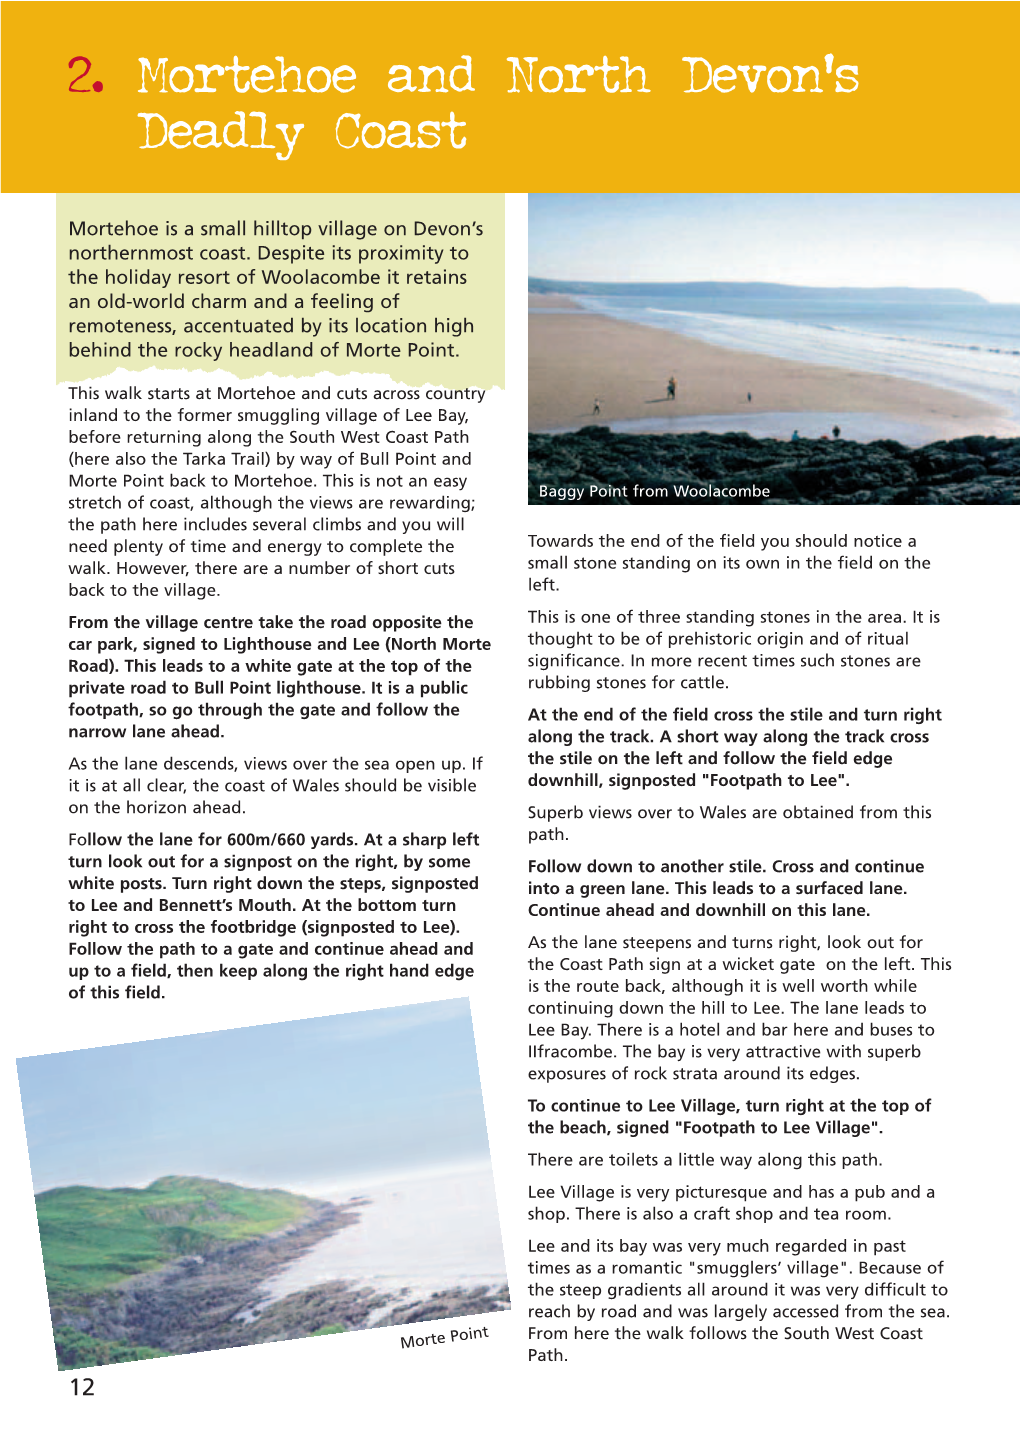 2. Mortehoe and North Devon's Deadly Coast